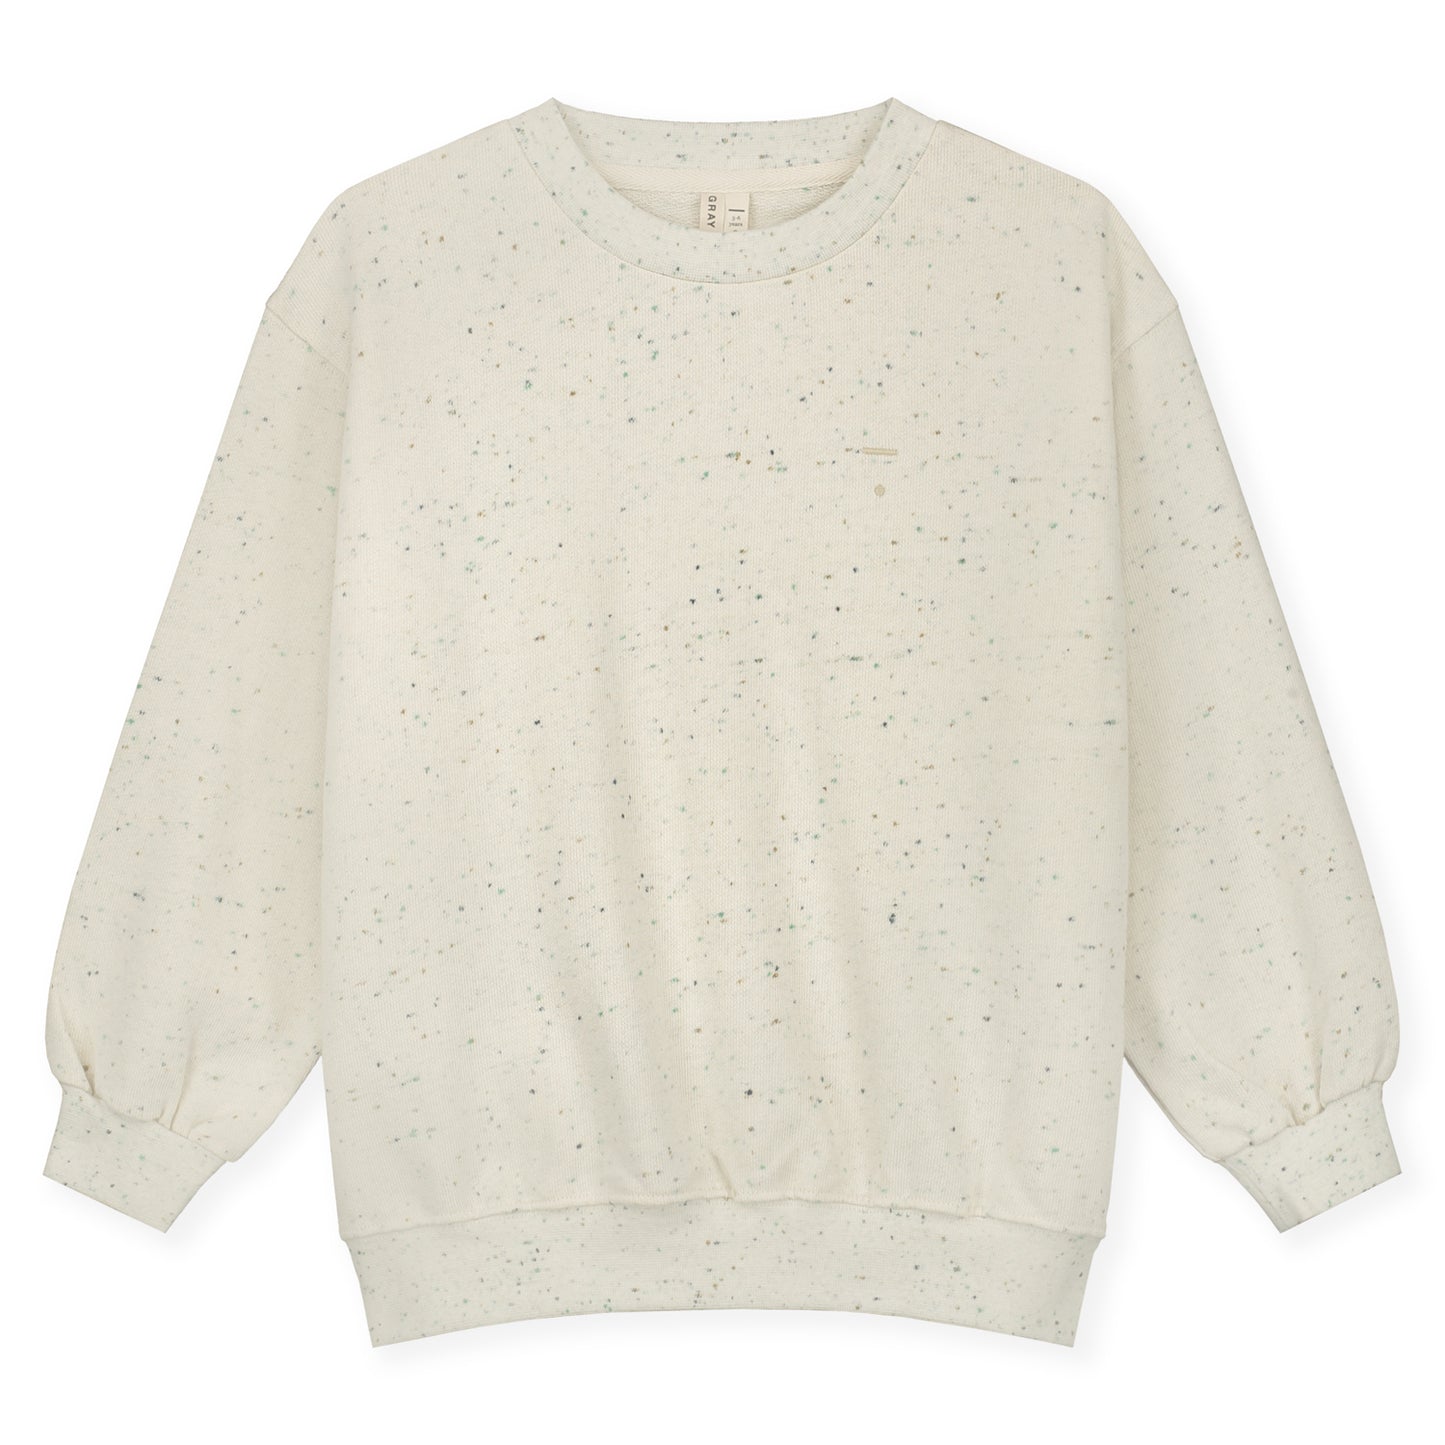 Gray label | Dropped Shoulder
Sweater GOTS |  Sprinkles